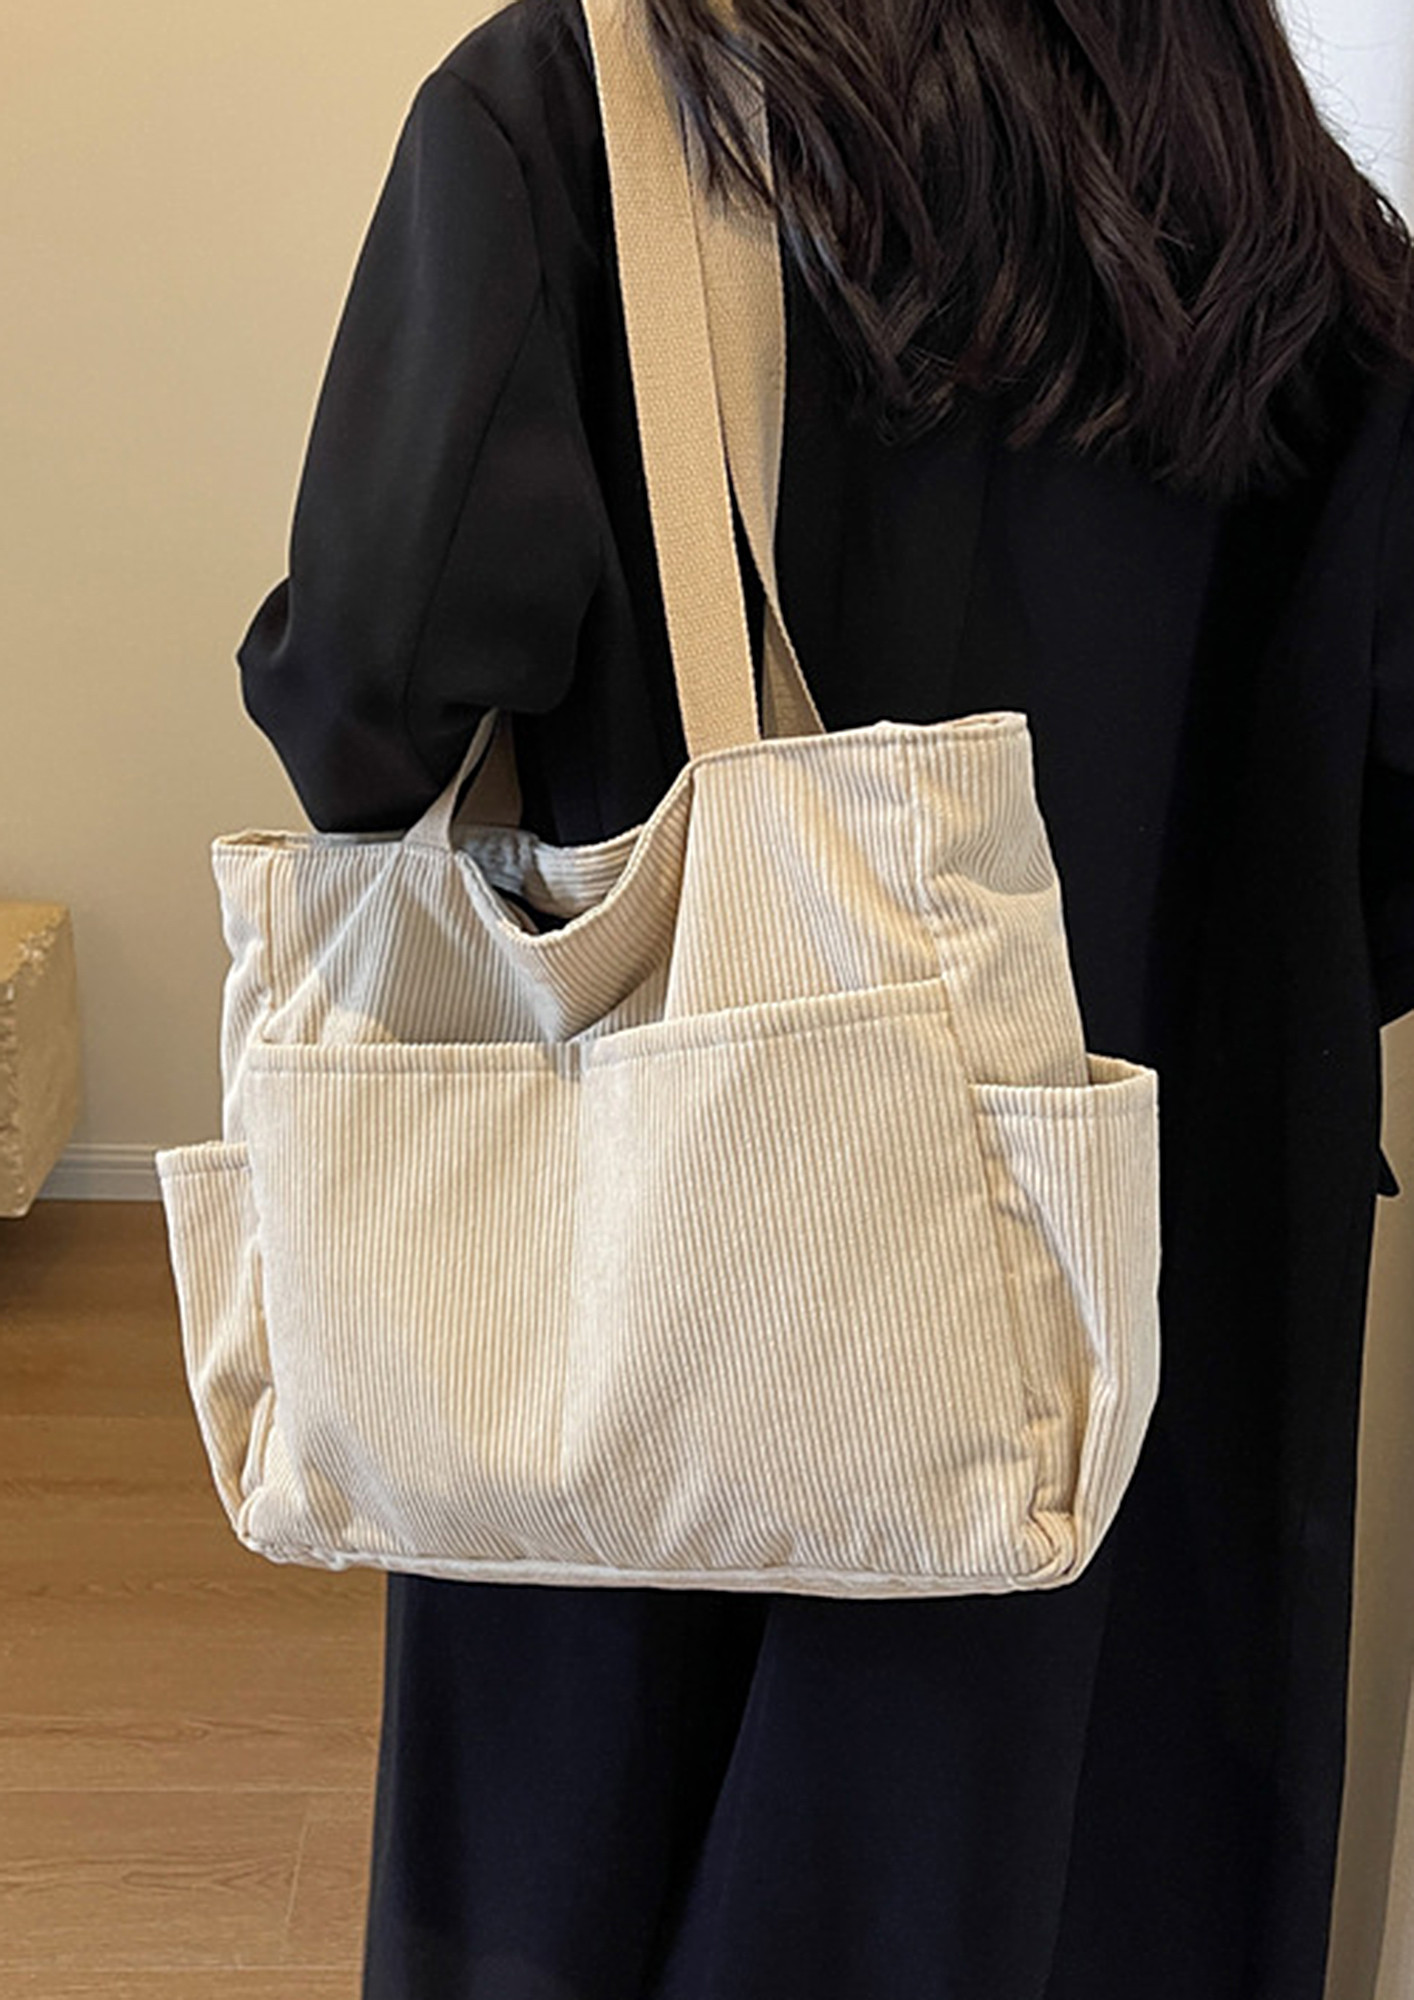 Buy WantGor Women Corduroy Tote Bag, Large Shoulder Hobo Bags Casual  Handbags Big Capacity Shopping Work Bag, Khaki, Classic,unique at Amazon.in